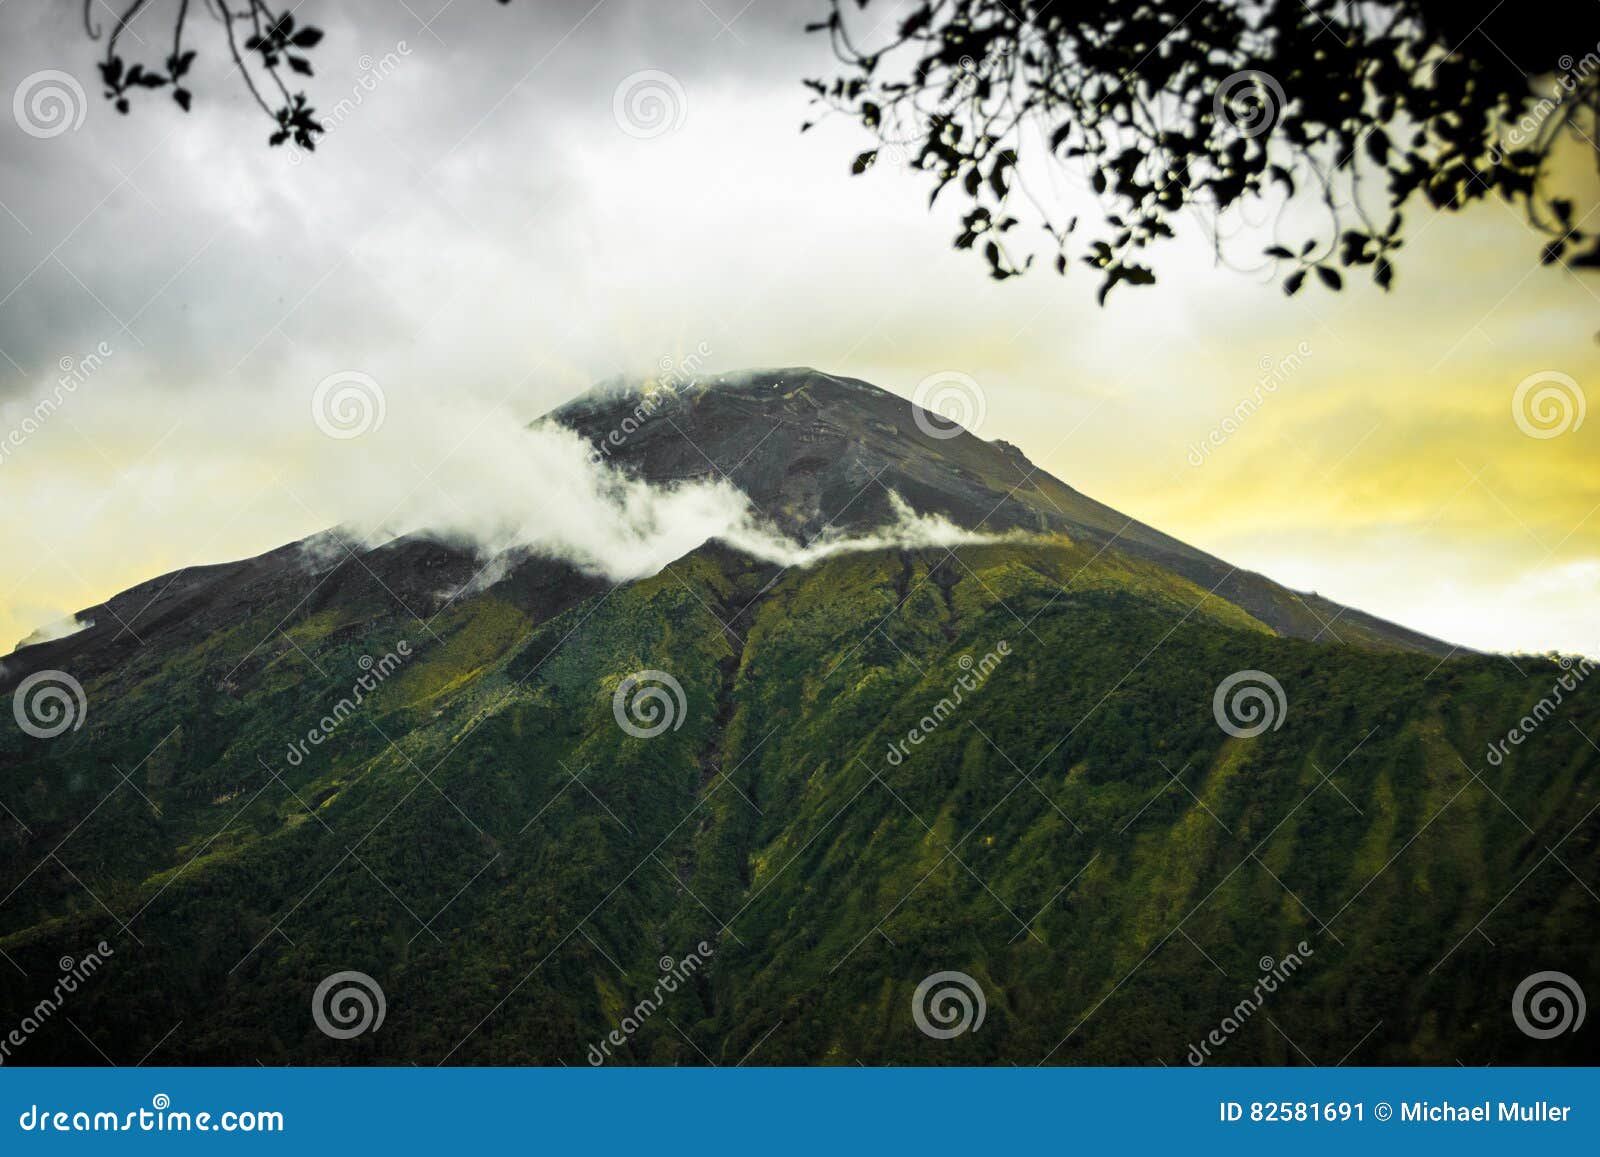 tungurahua volcano ecuador